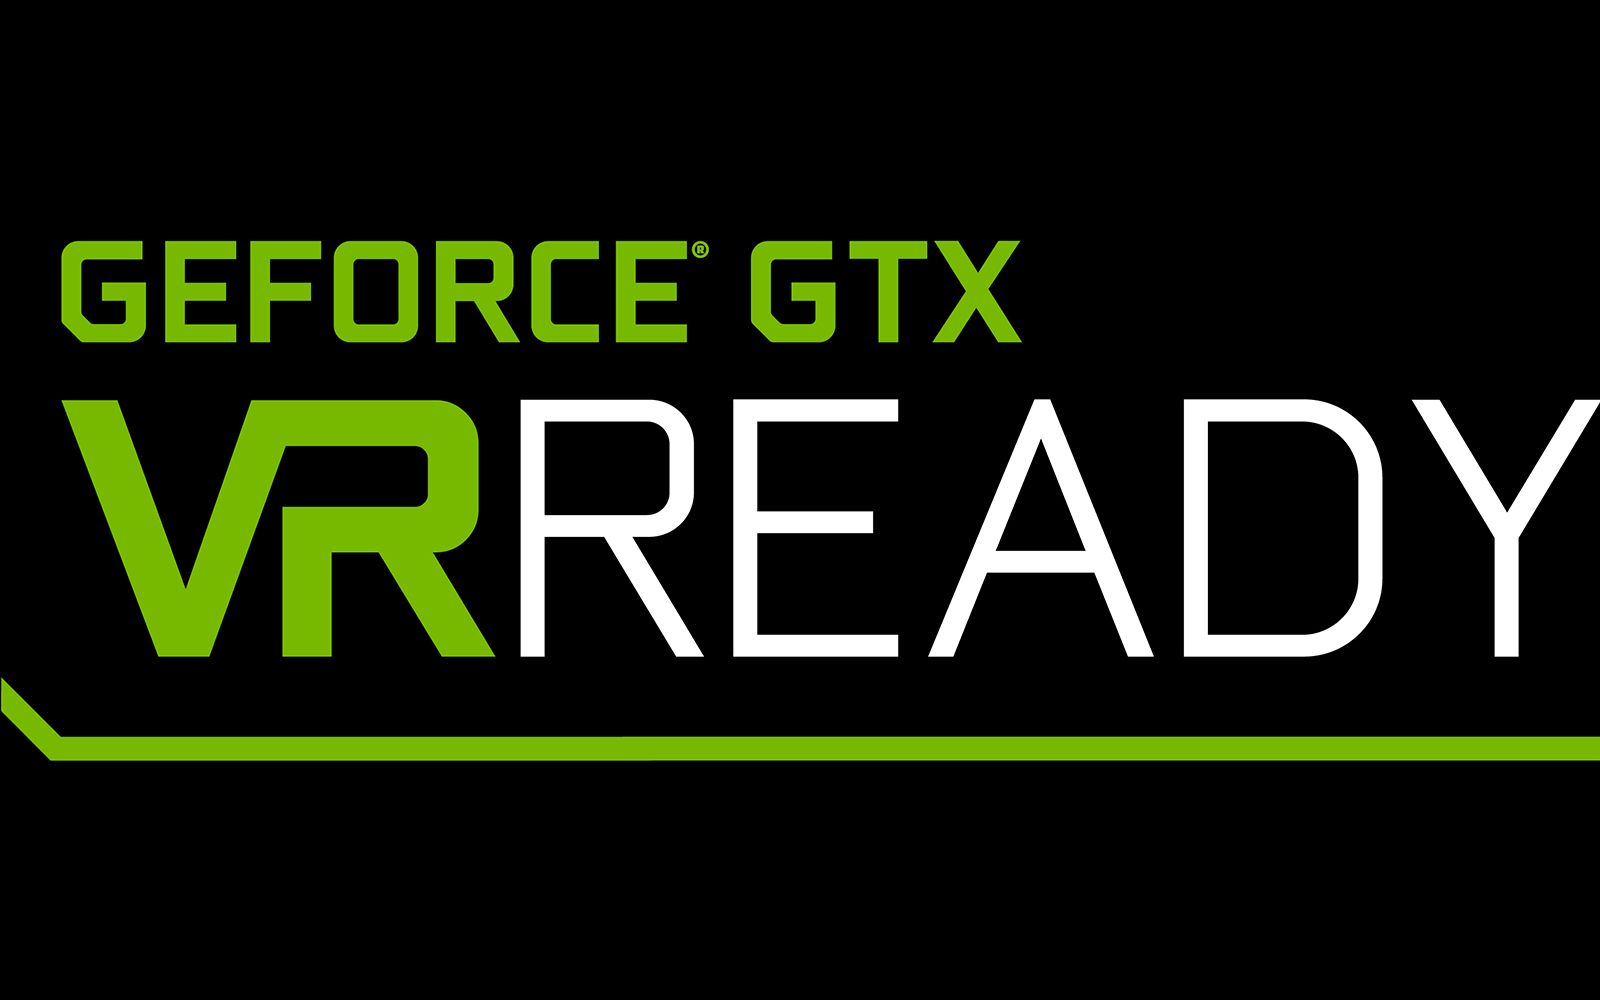 nvidia geforce gtx vr ready marking to verify pcs capable of virtual reality image 1